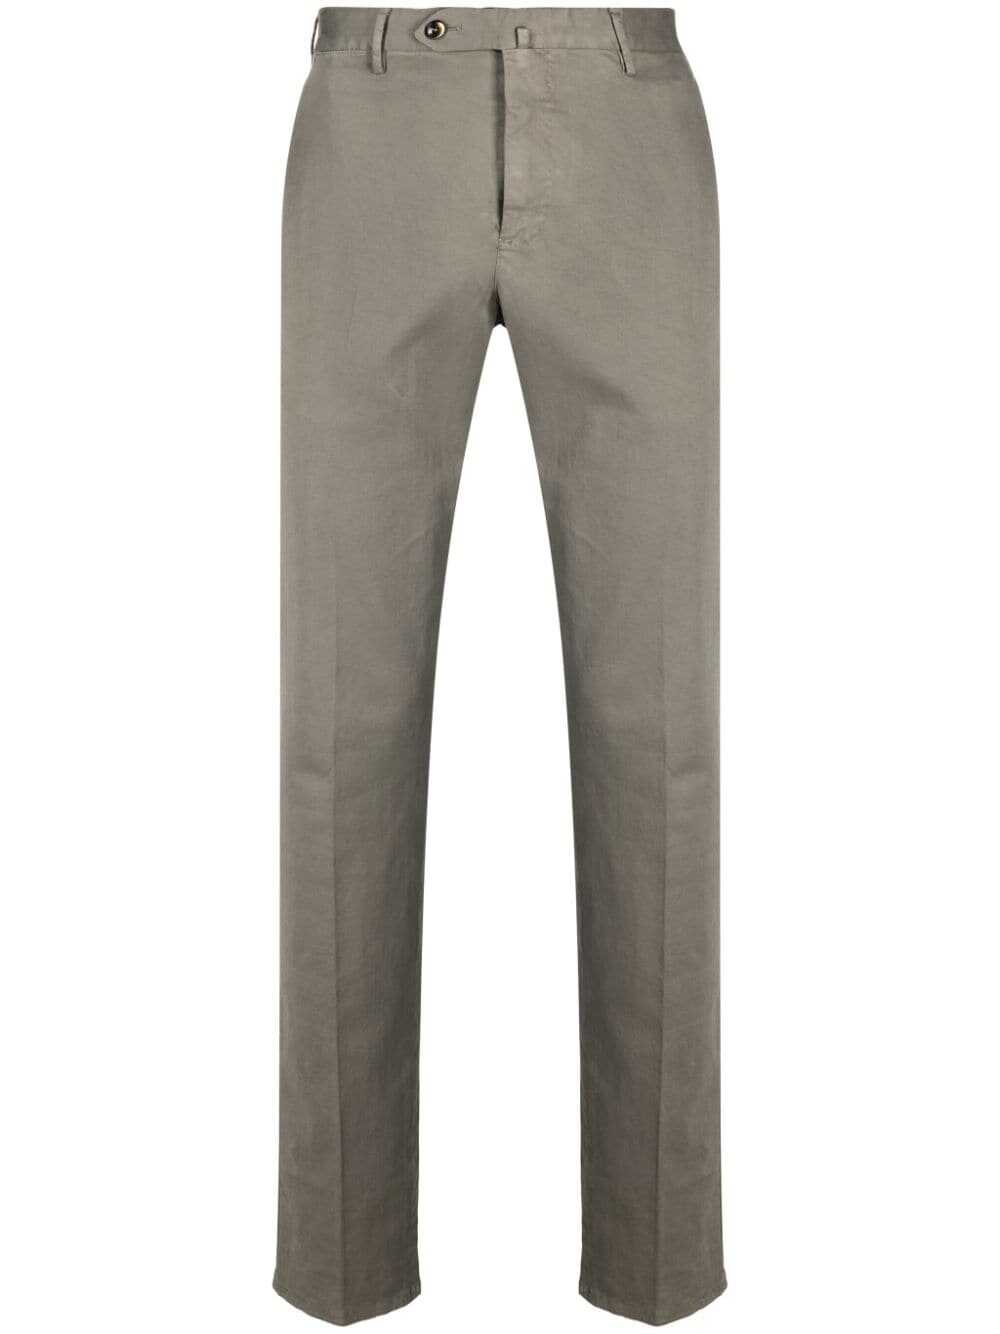 PT TORINO Trousers Grey Grey